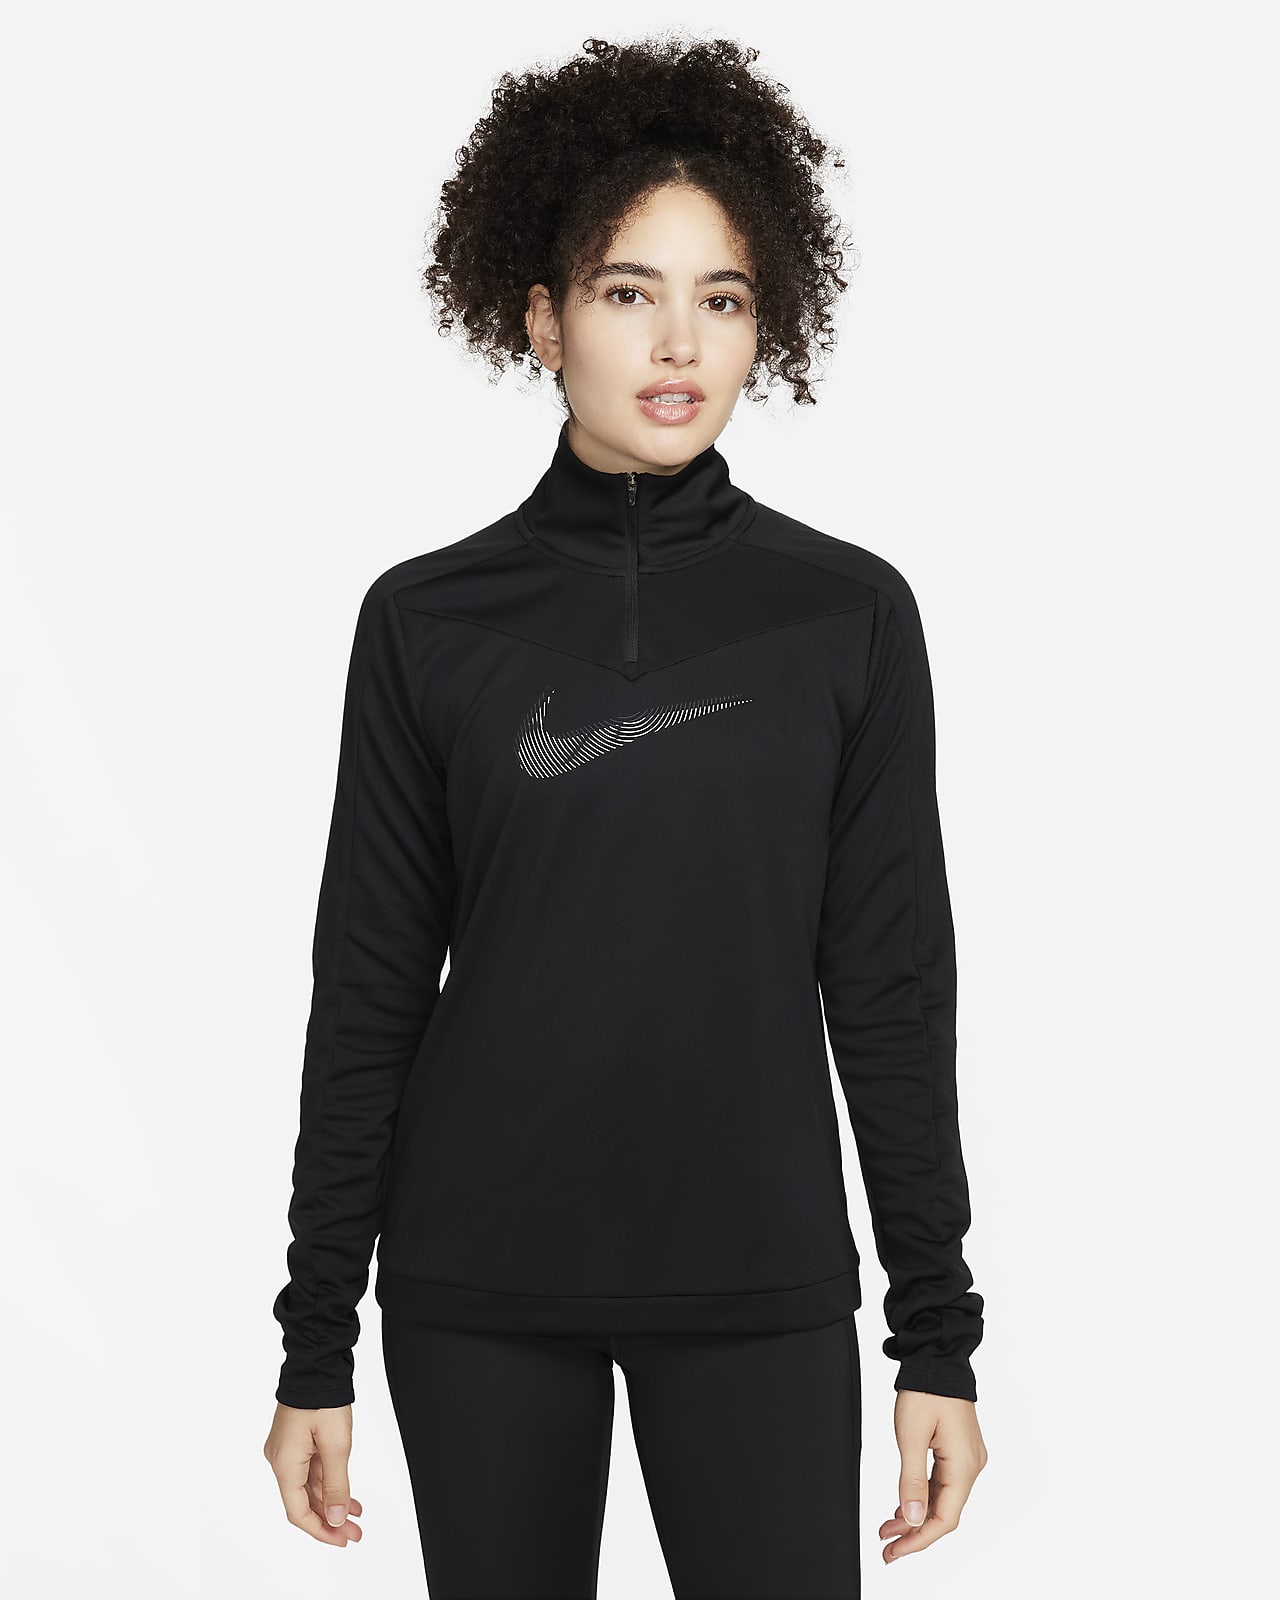 Nike Dri-FIT Swoosh Women's 1/4-Zip Running Top